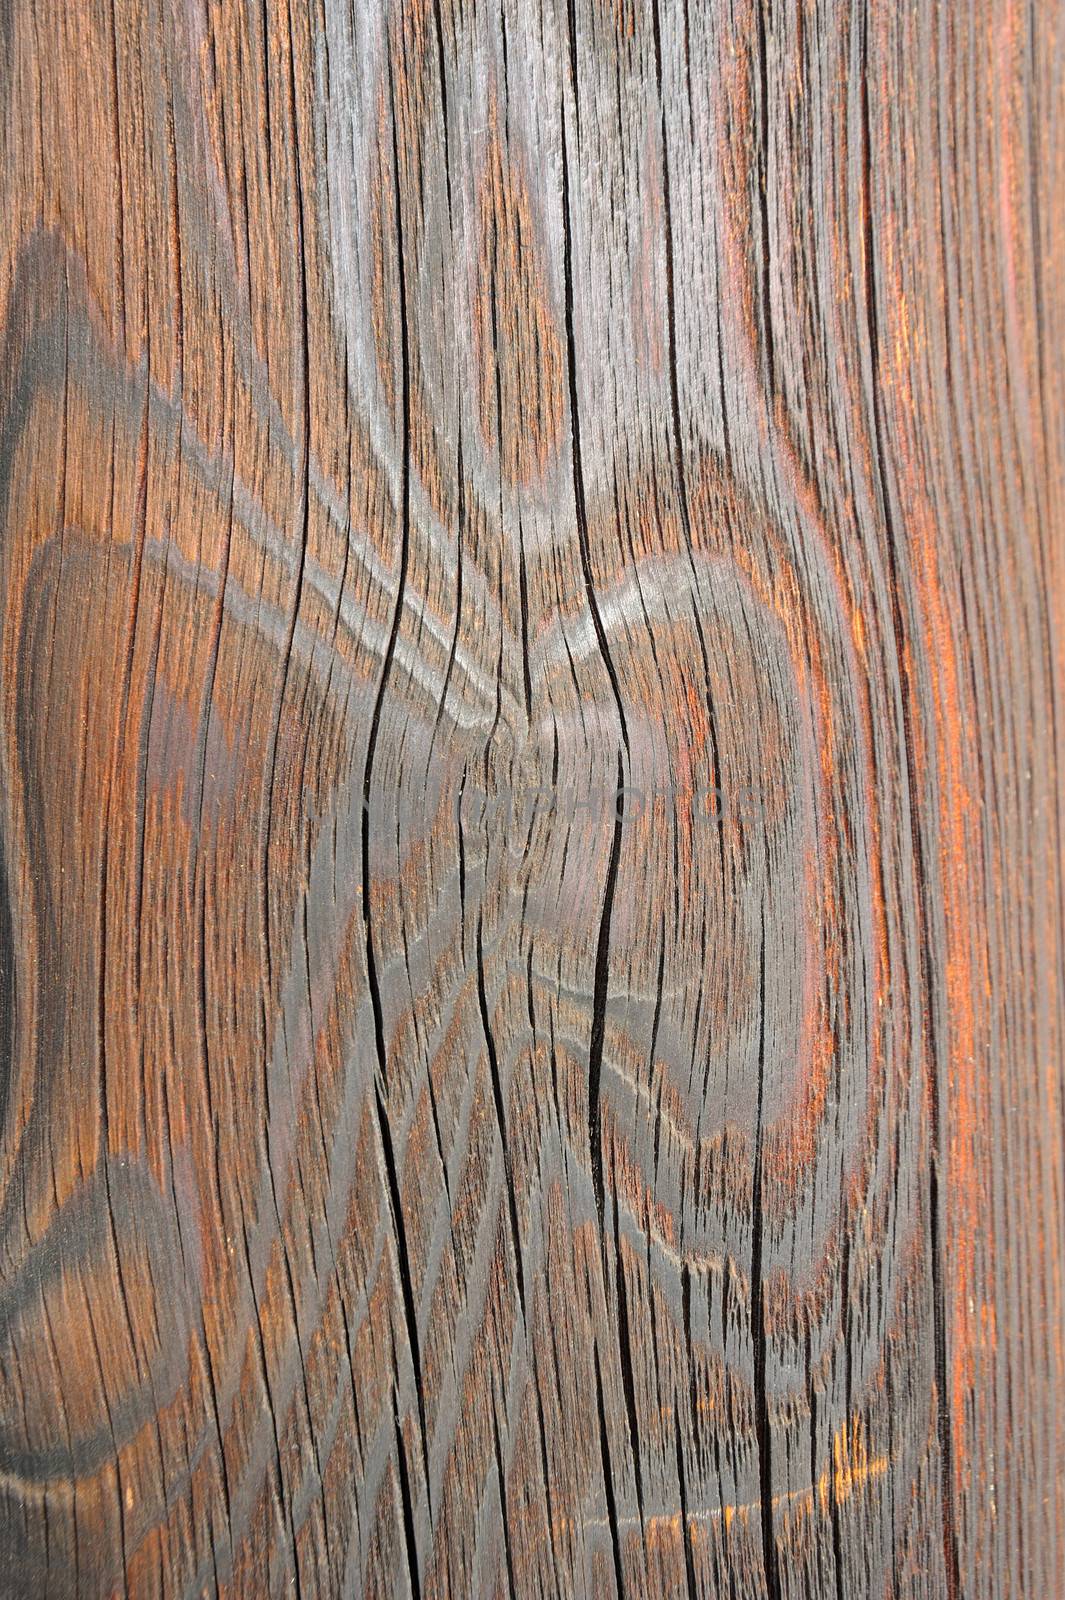 Closeup Wooden Texture